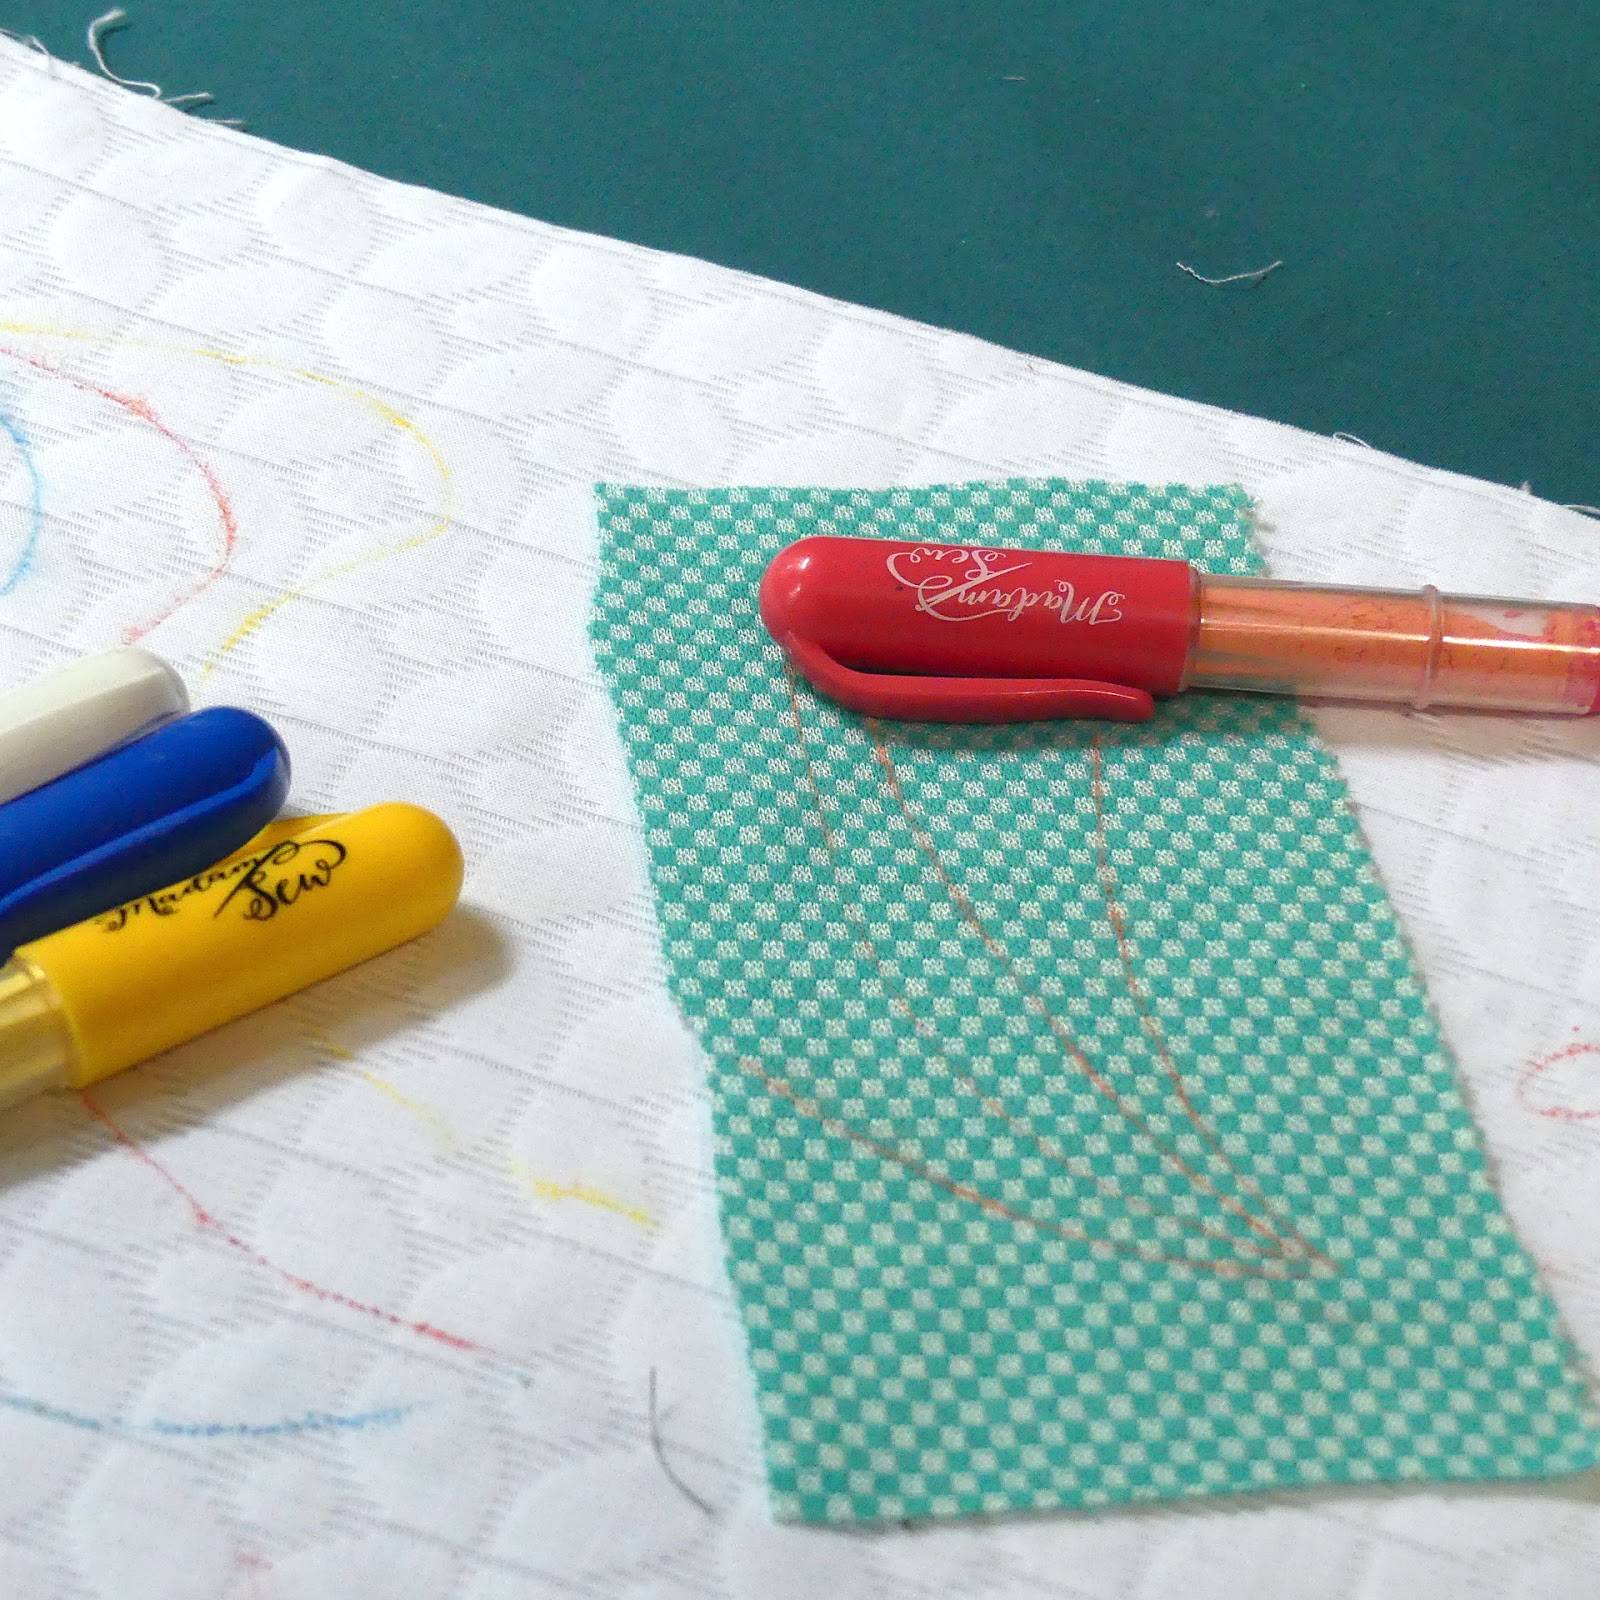 Fabric Marking Pen, Cloth Cutting Tailor Draw DIY Tool Water